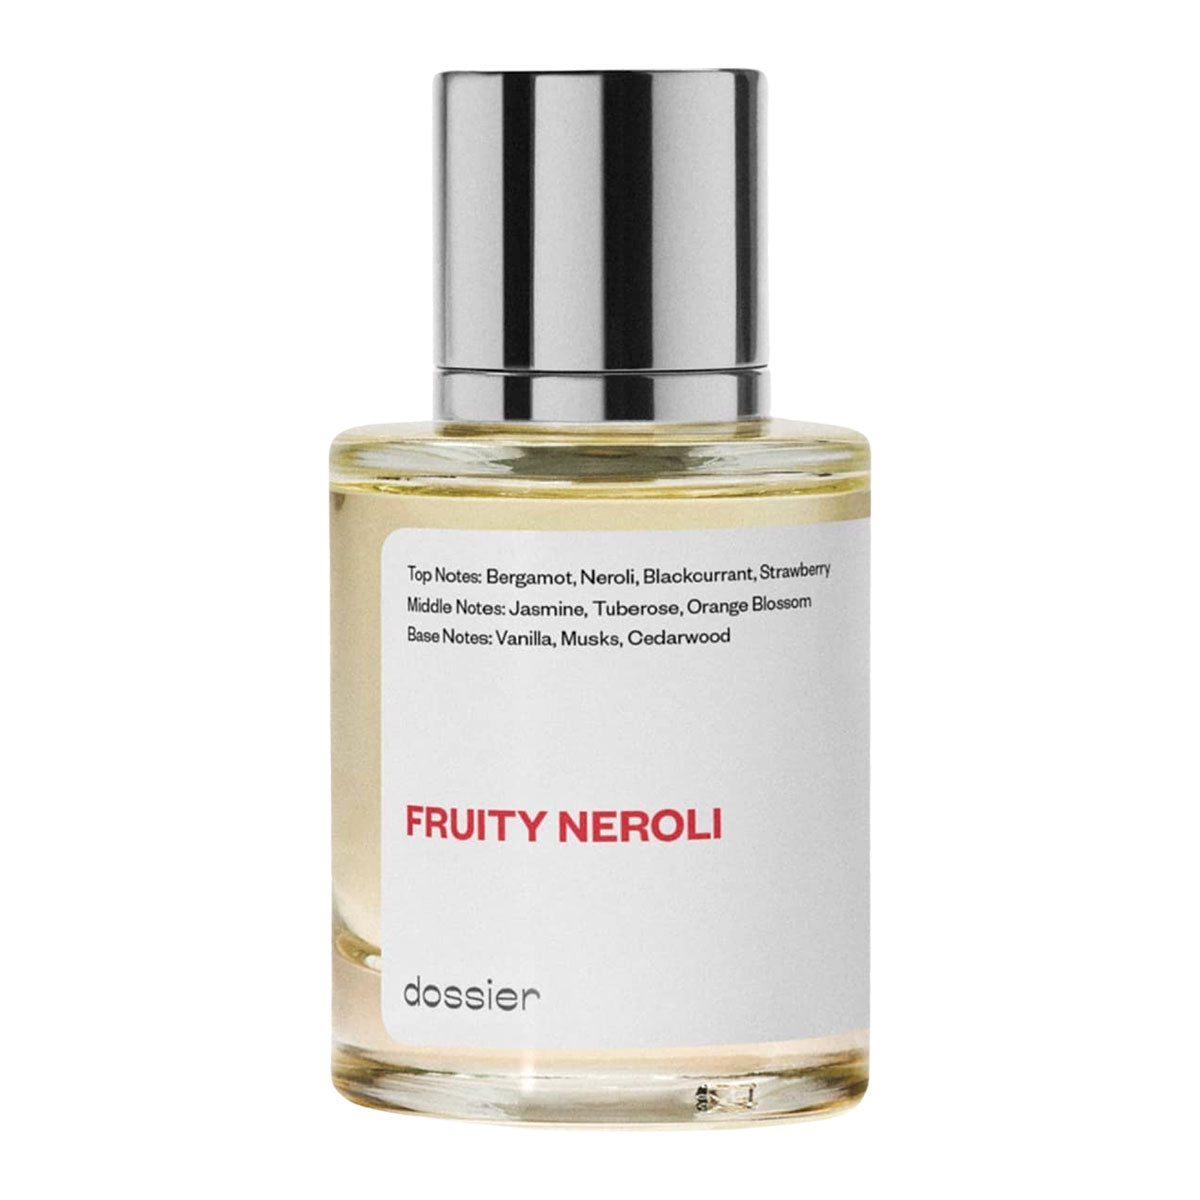 Dossier Fruity Neroli Eau de Parfum Inspired by Armani's My Way 50 ml